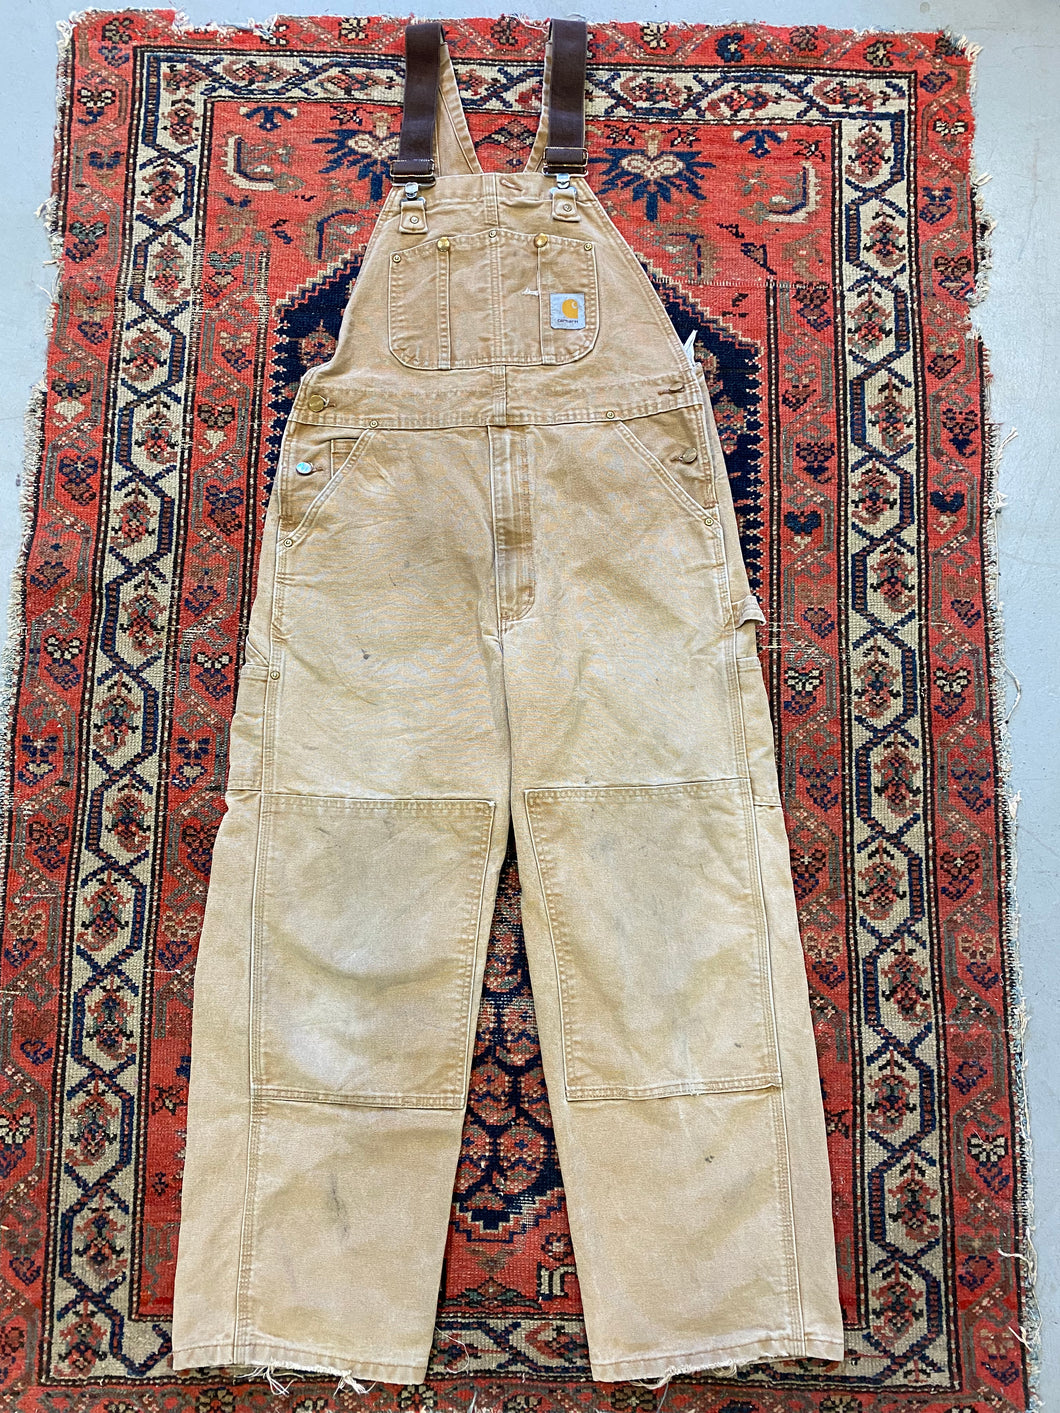 Vintage faded Carhartt overalls - M/L